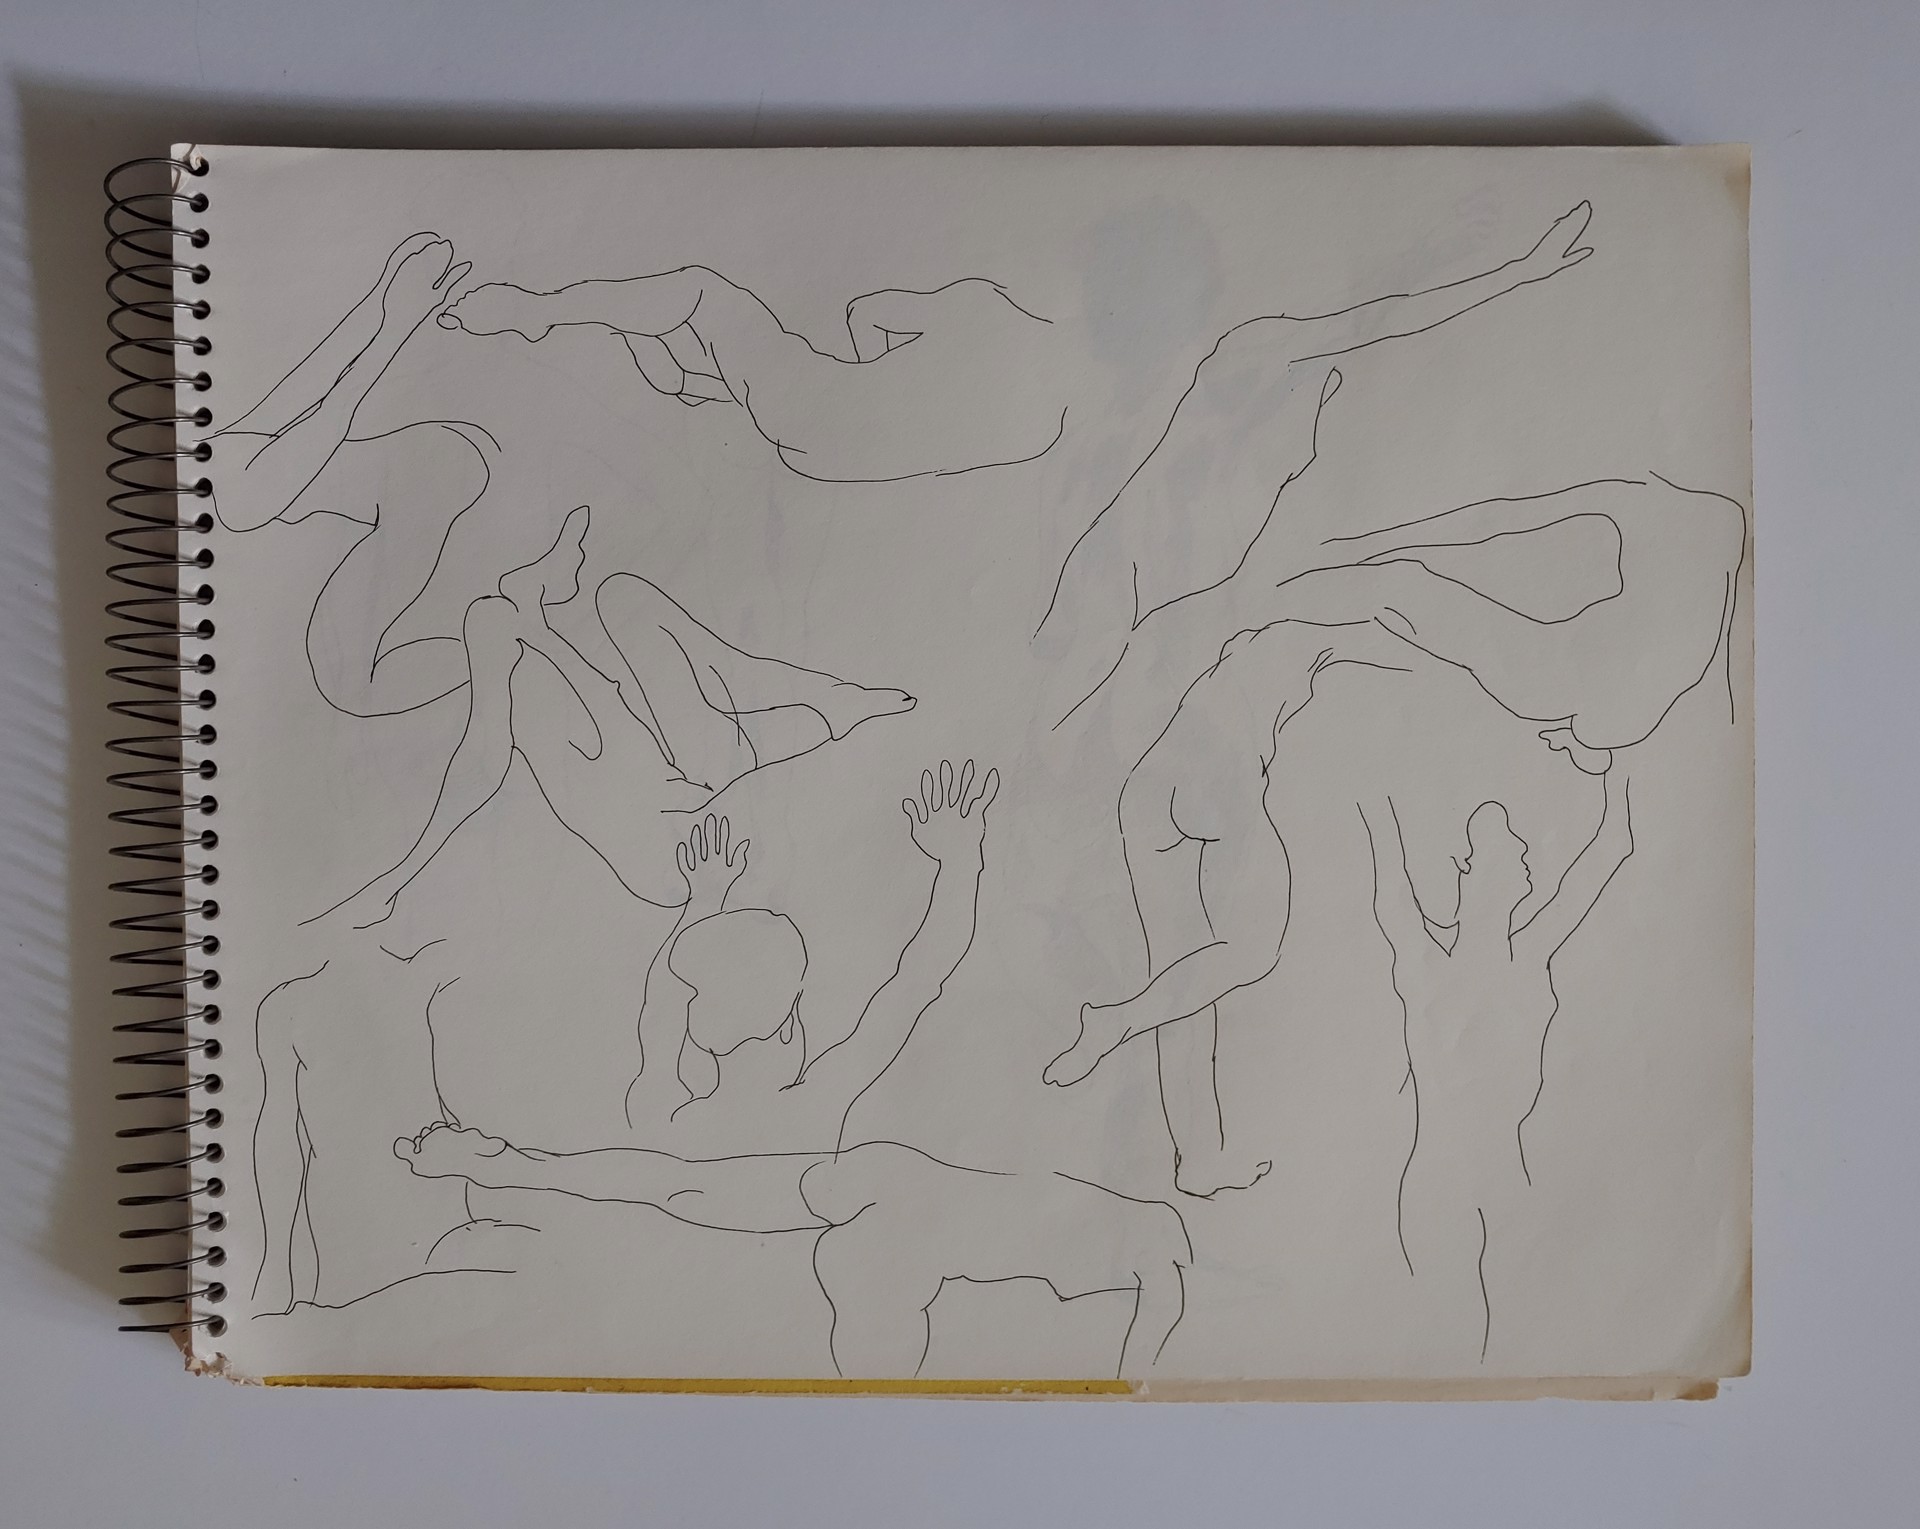 October 1975 Sketchbook by David Amdur